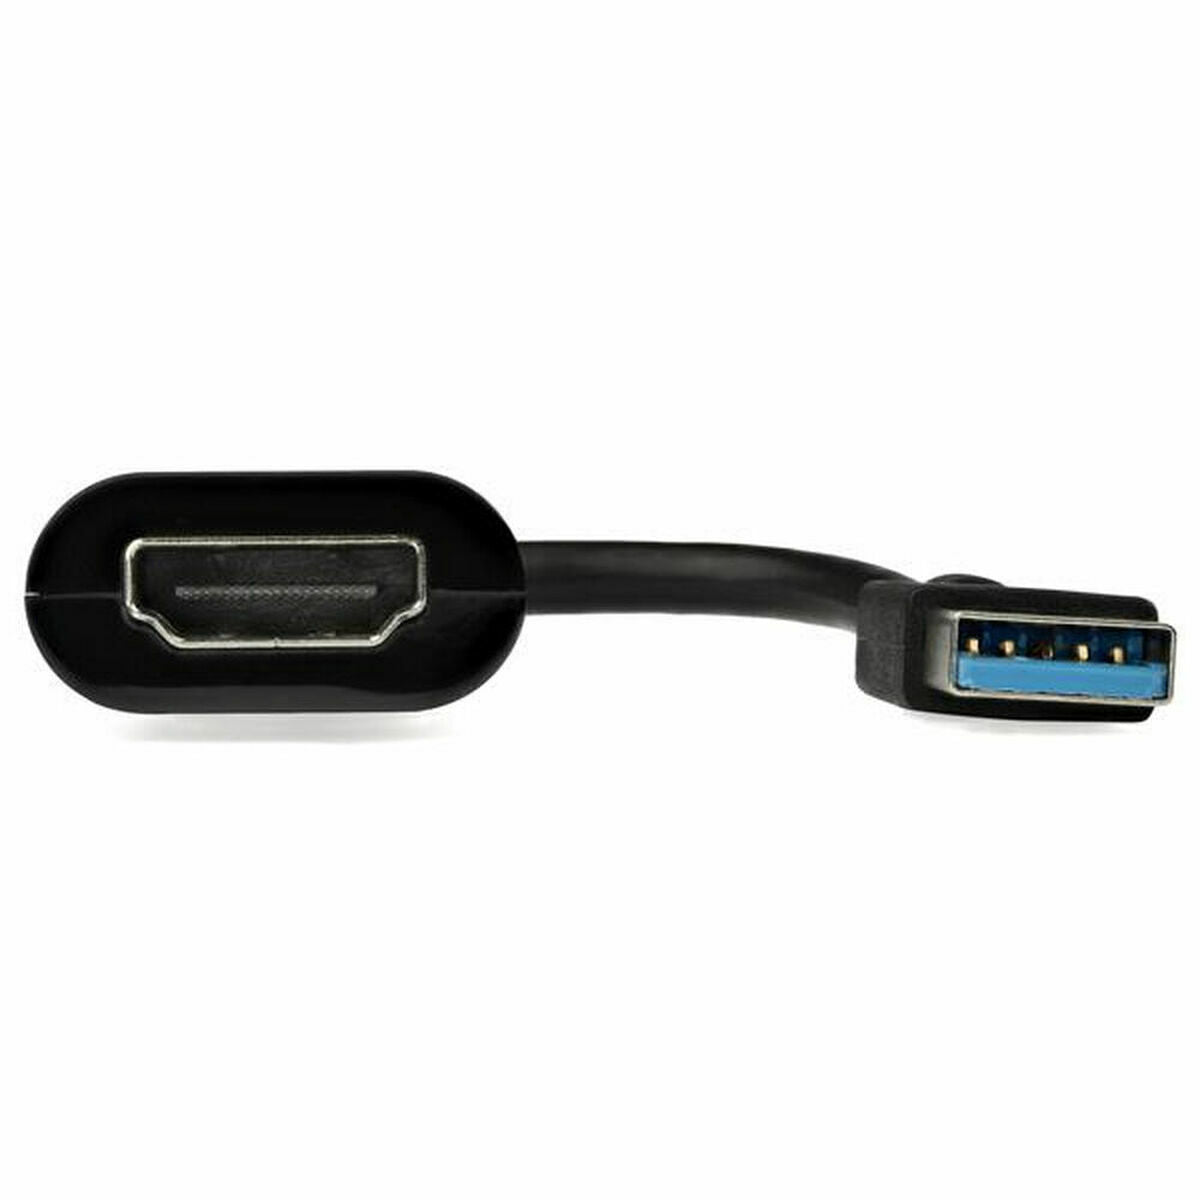 USB 3.0 to HDMI Adapter Startech USB32HDES Black